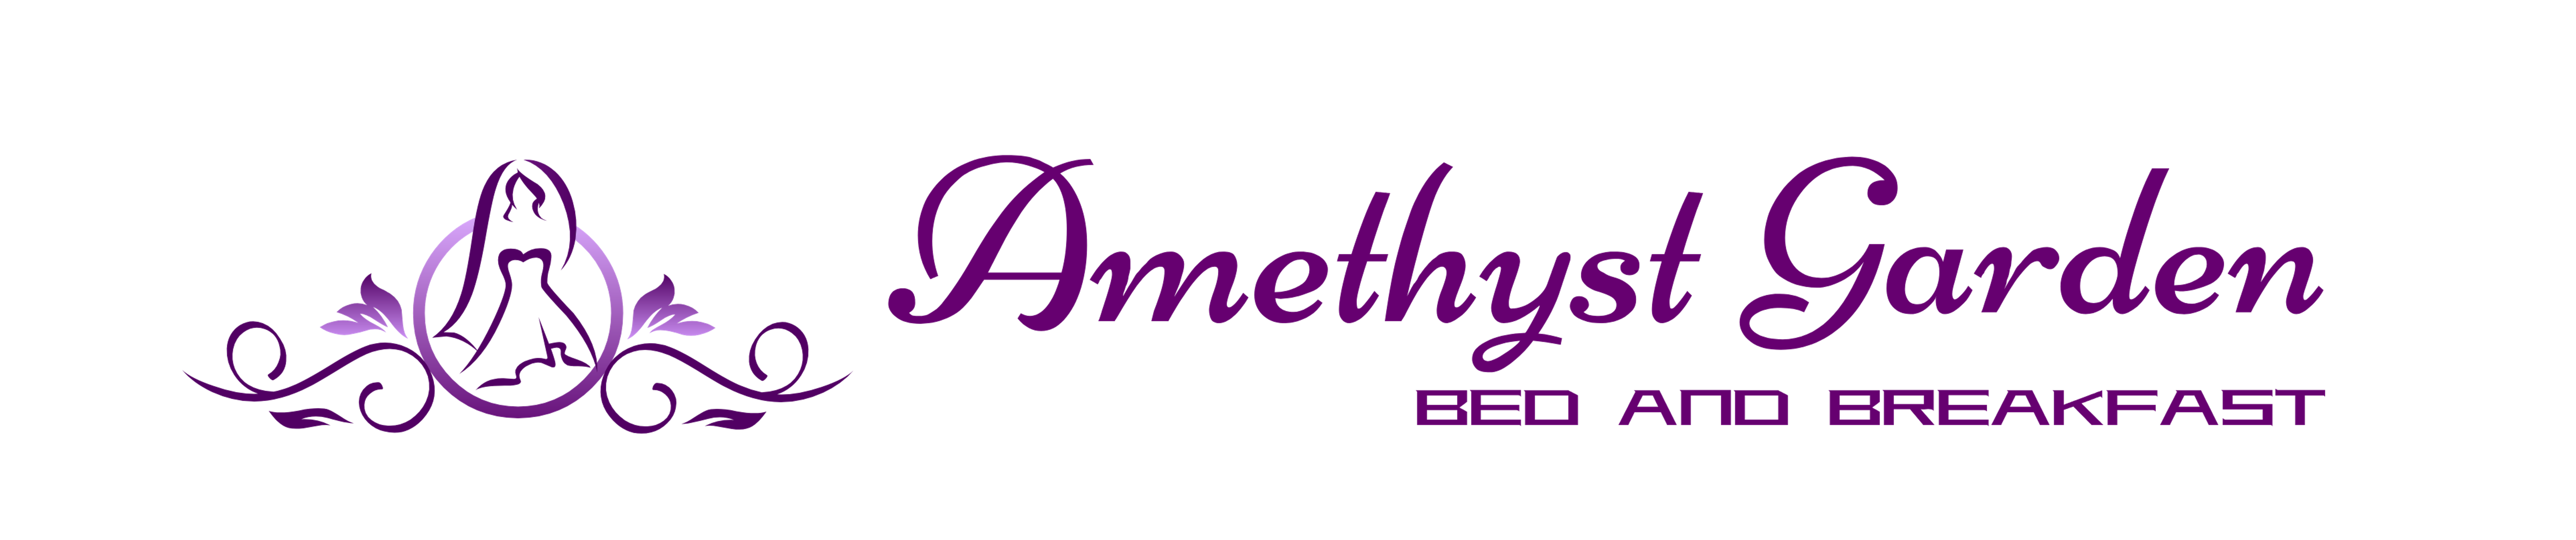 Amethyst Garden B&B  secure online reservation system